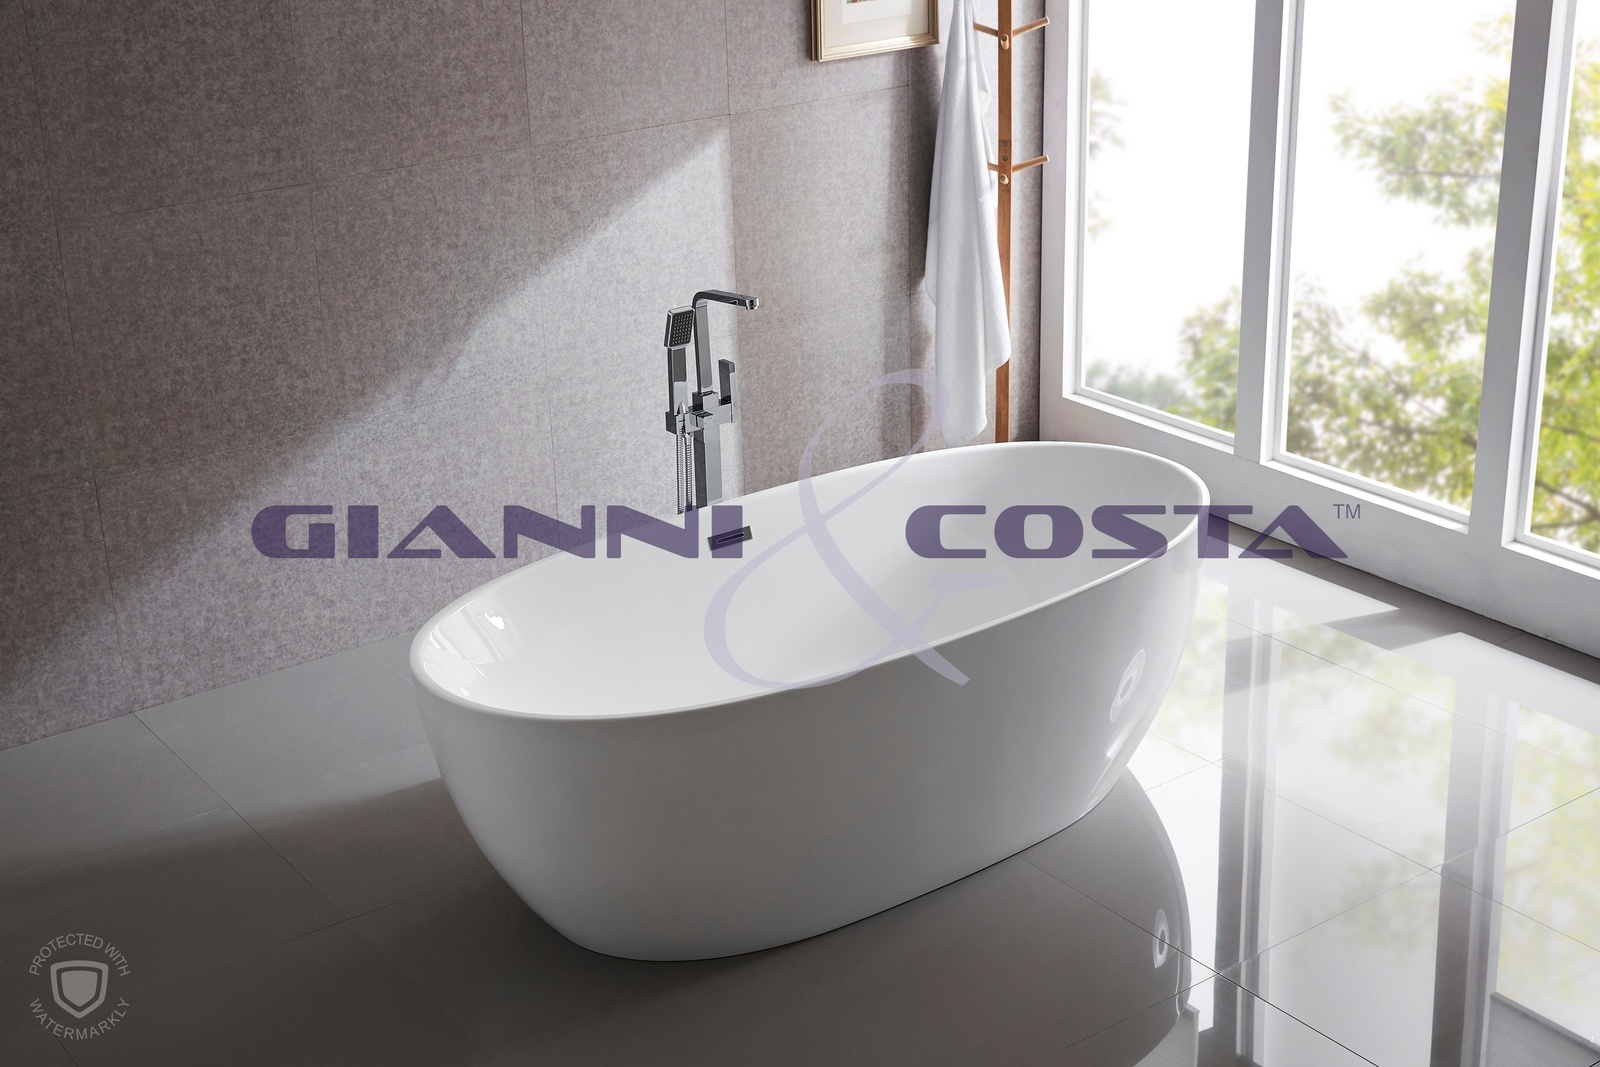 Acrylic Free Standing Bath Tub - Gloss White - Model Carrara GC6833 1500mm